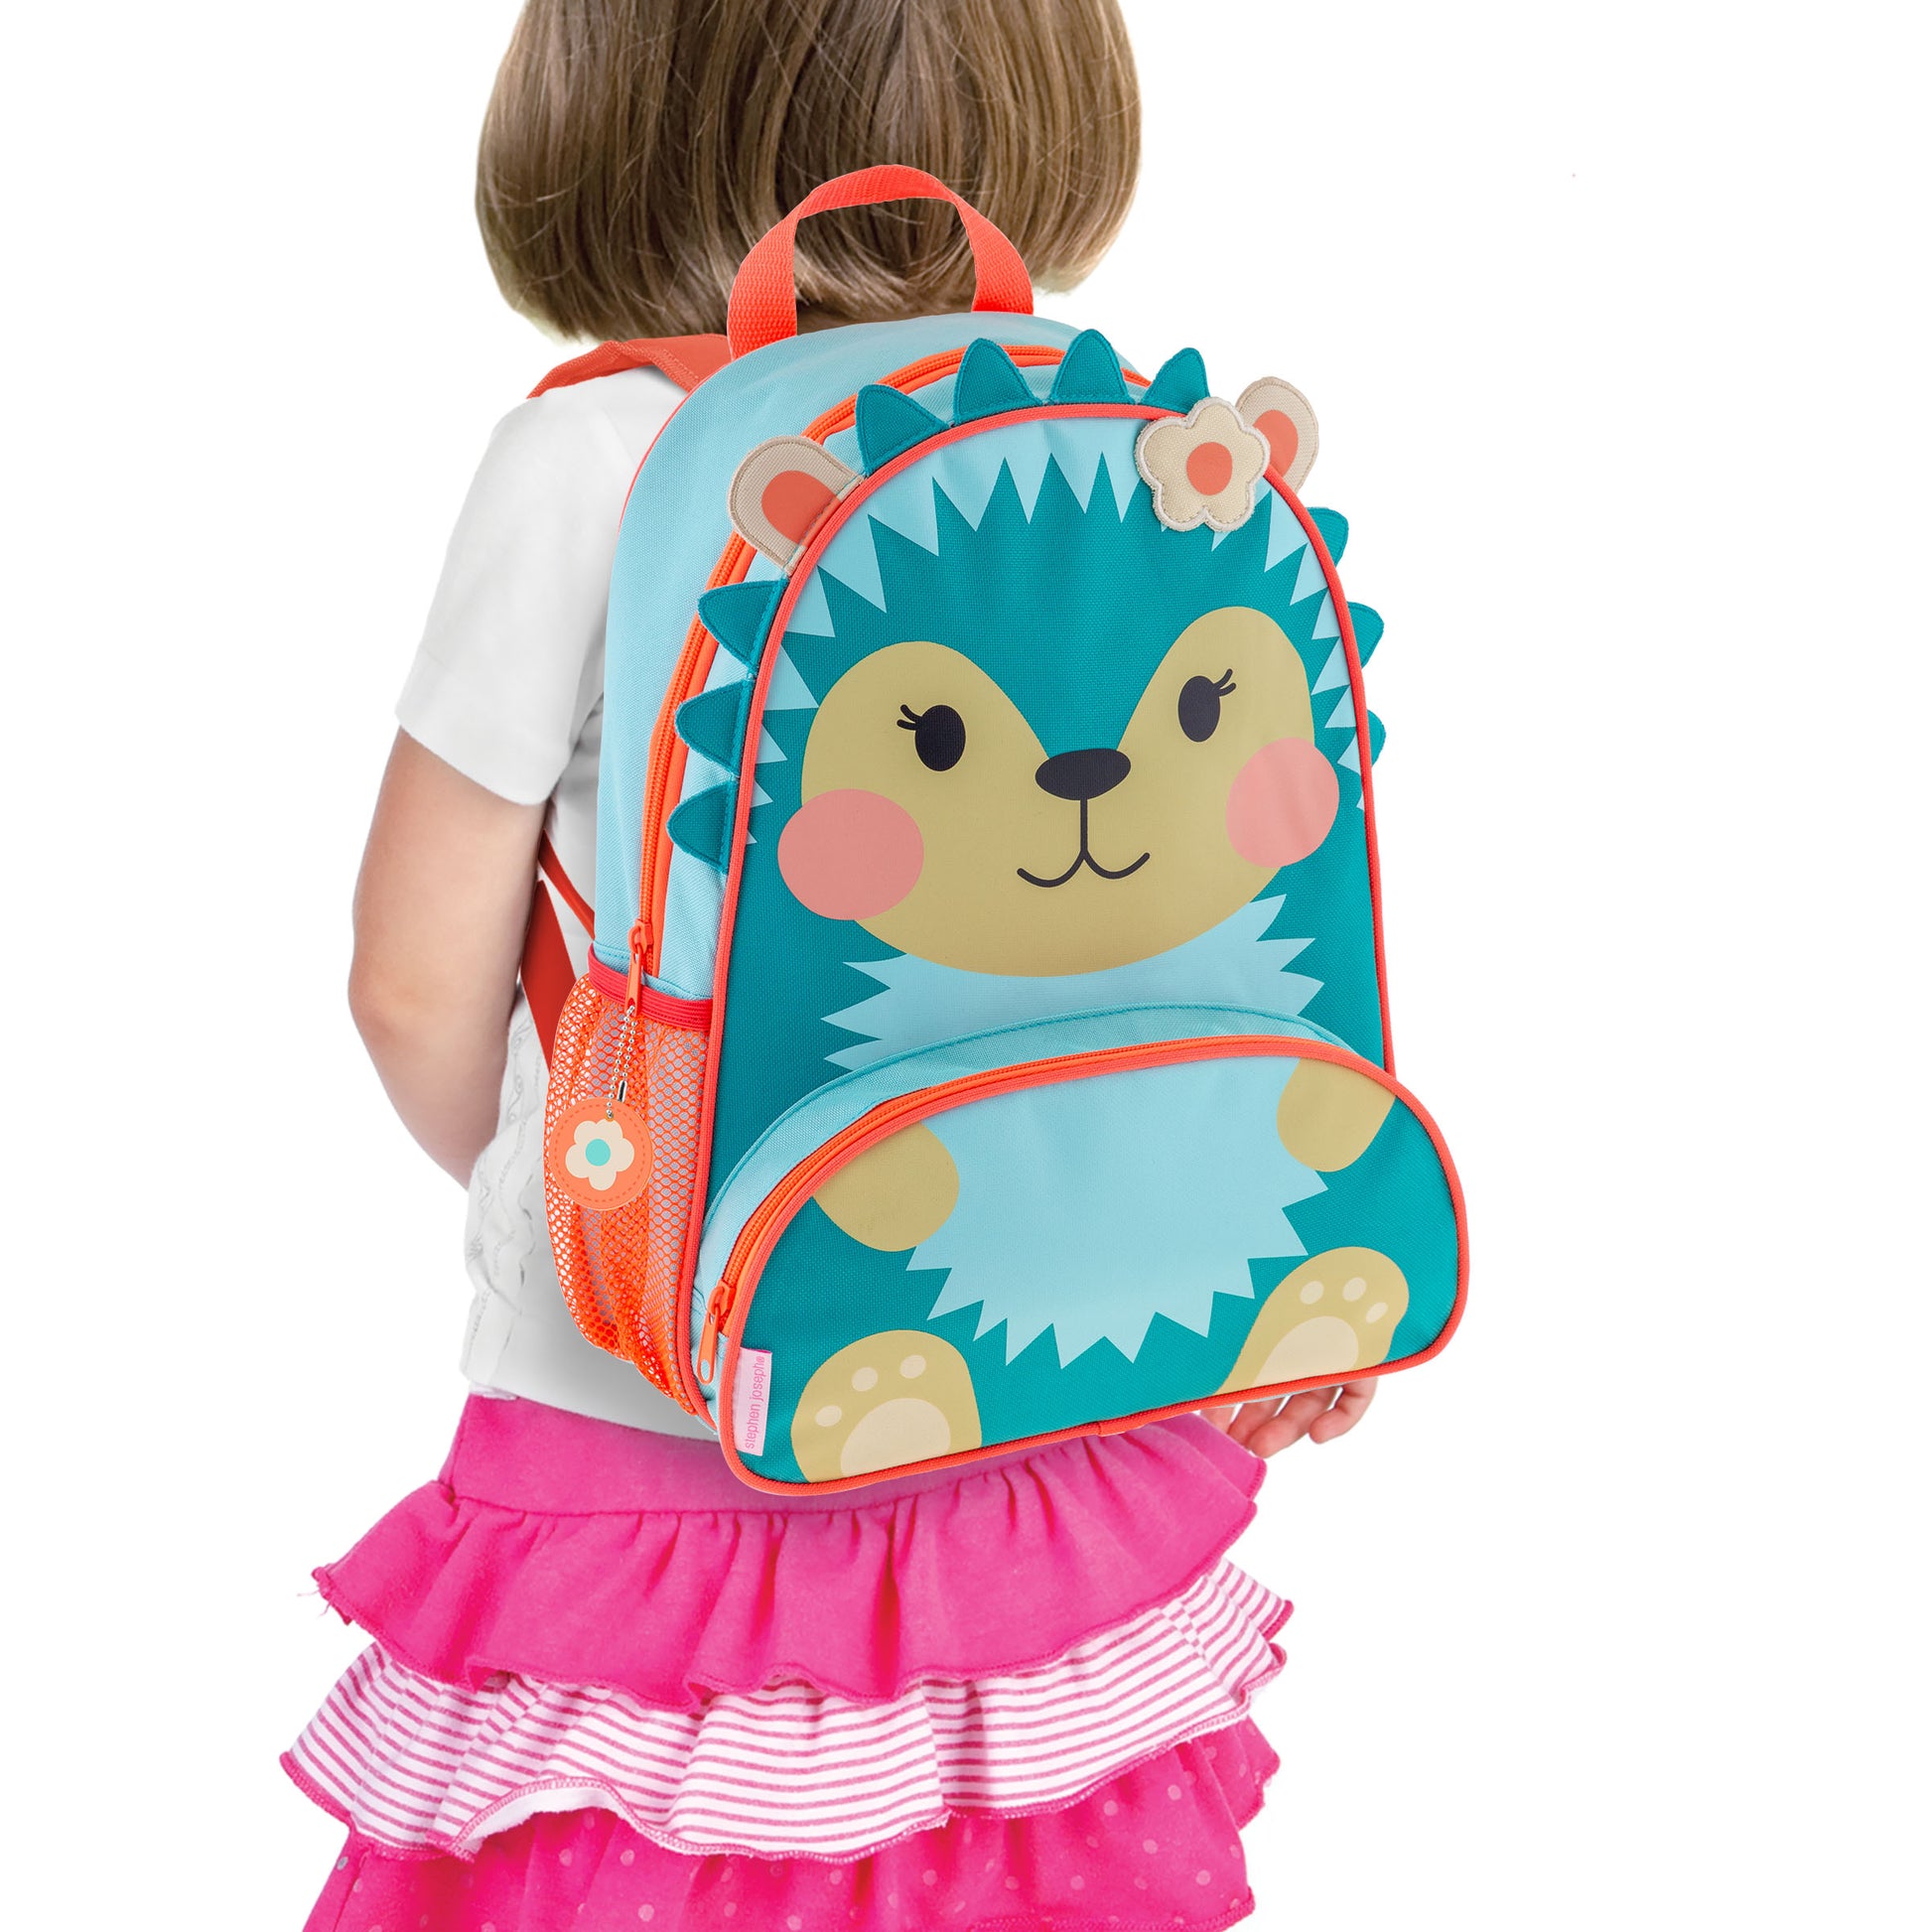 Hedgehog Sidekick Backpack with Personalization